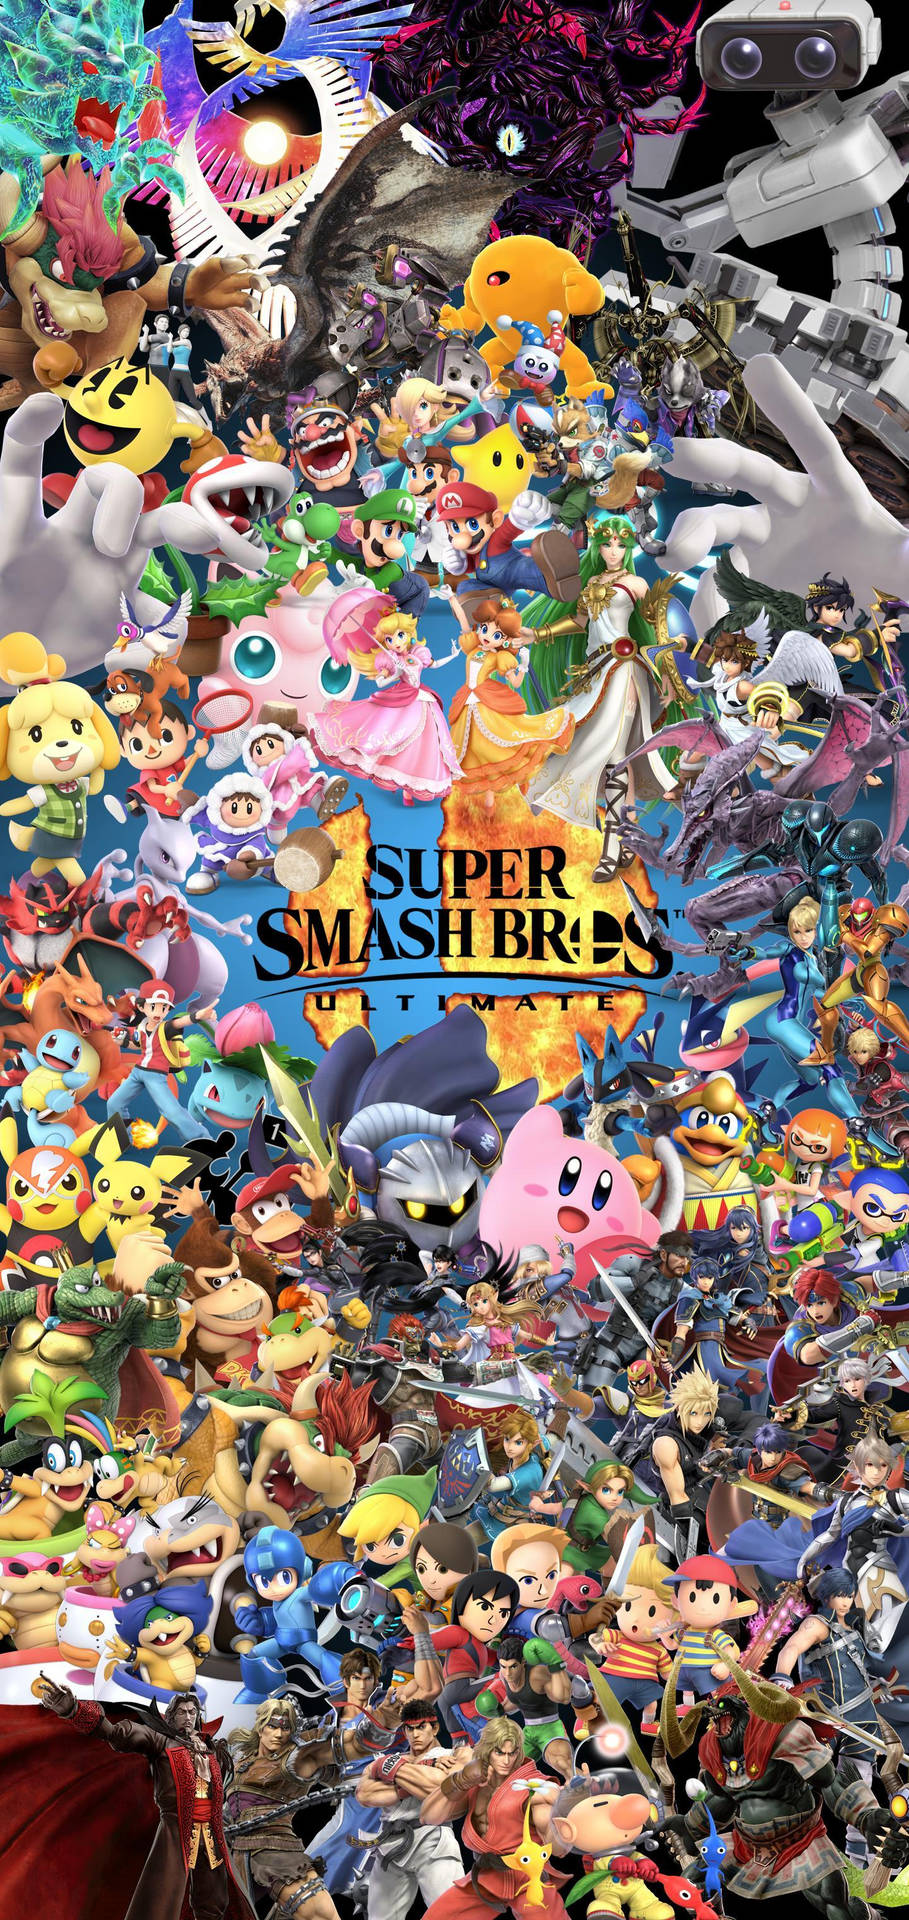 Fondos De Super Smash Bros Ultimate